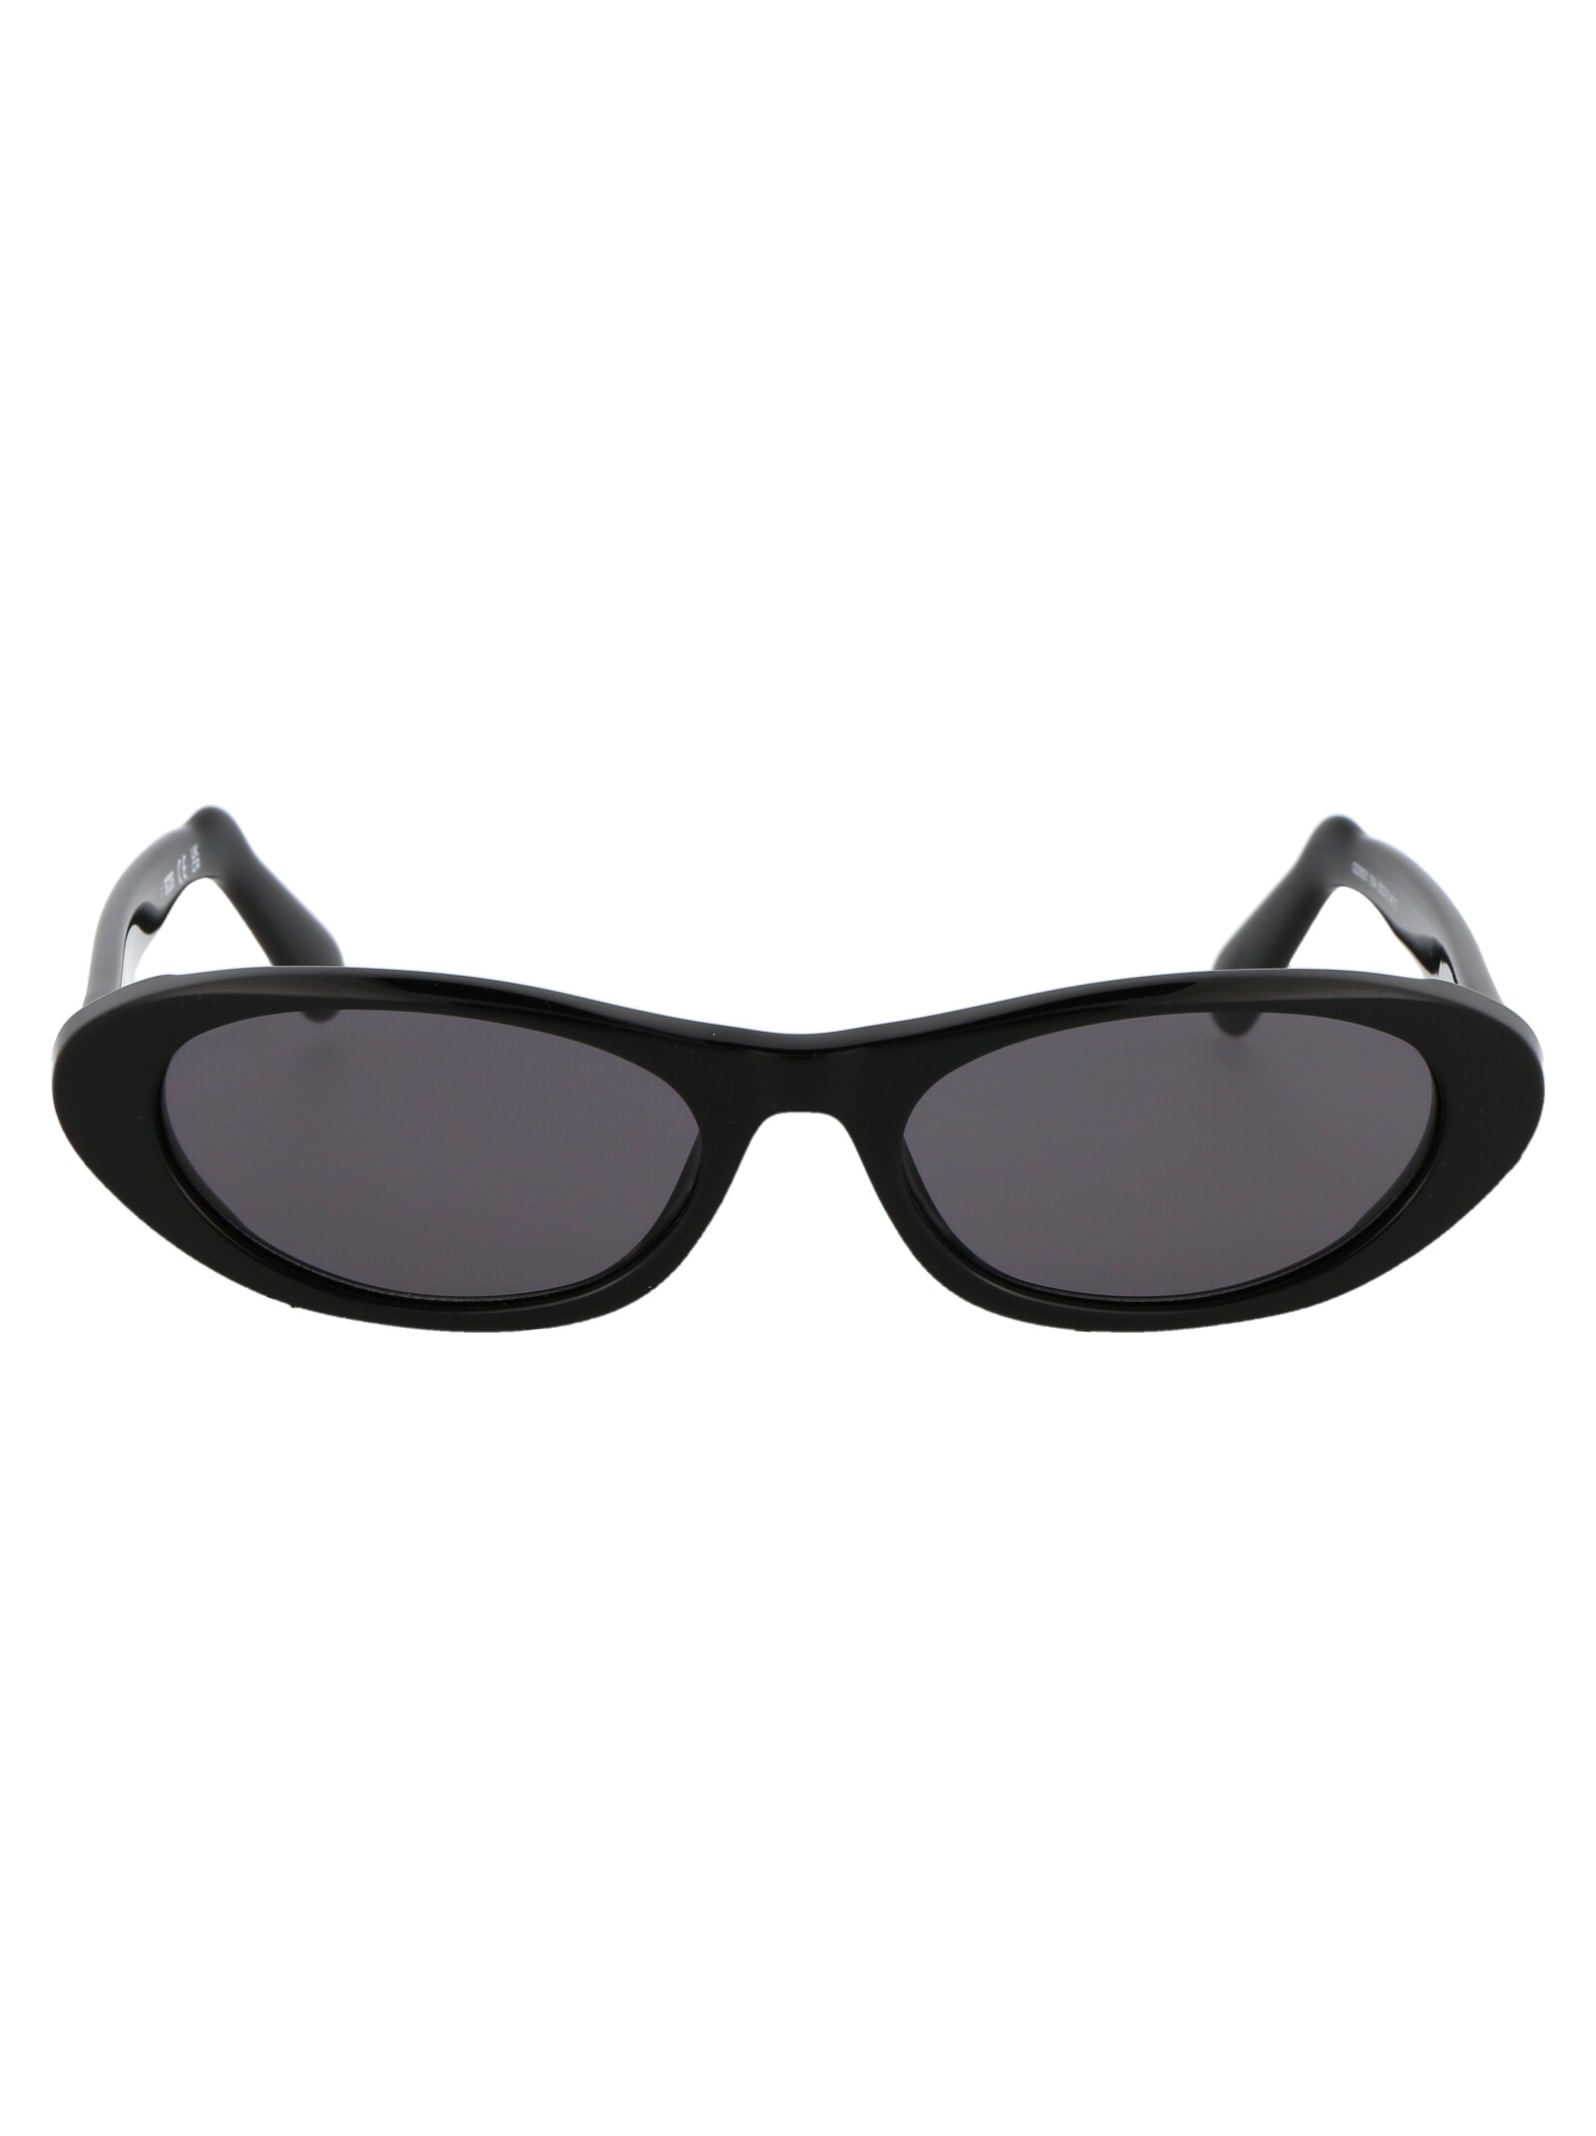 Gd0021 Sunglasses